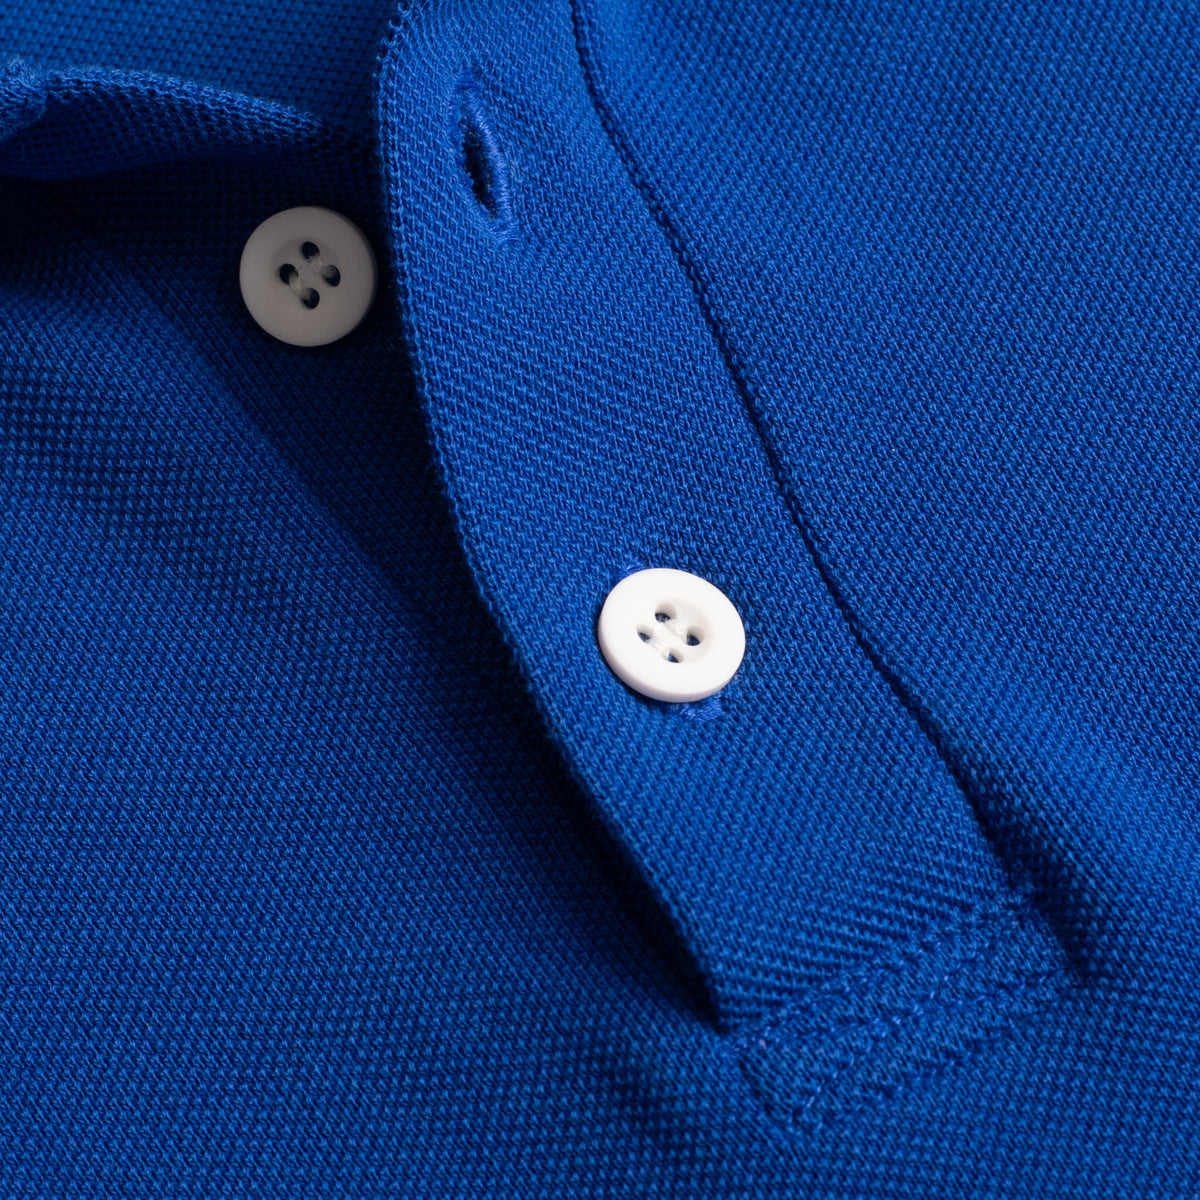 Royal Blue Short Sleeved Polo Shirt